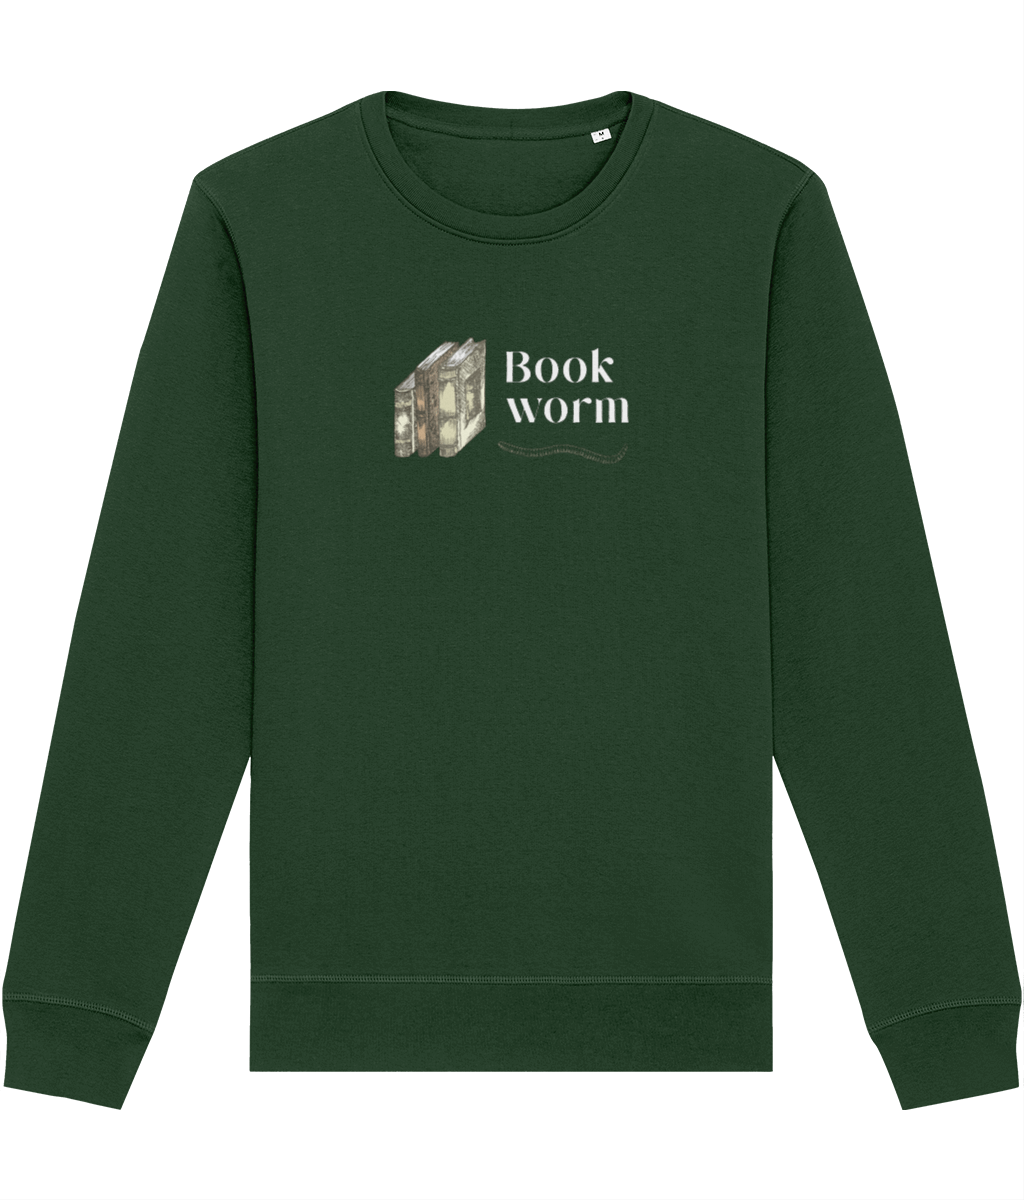 Books 'Bookworm' Organic Cotton Sweatshirt - Book worm